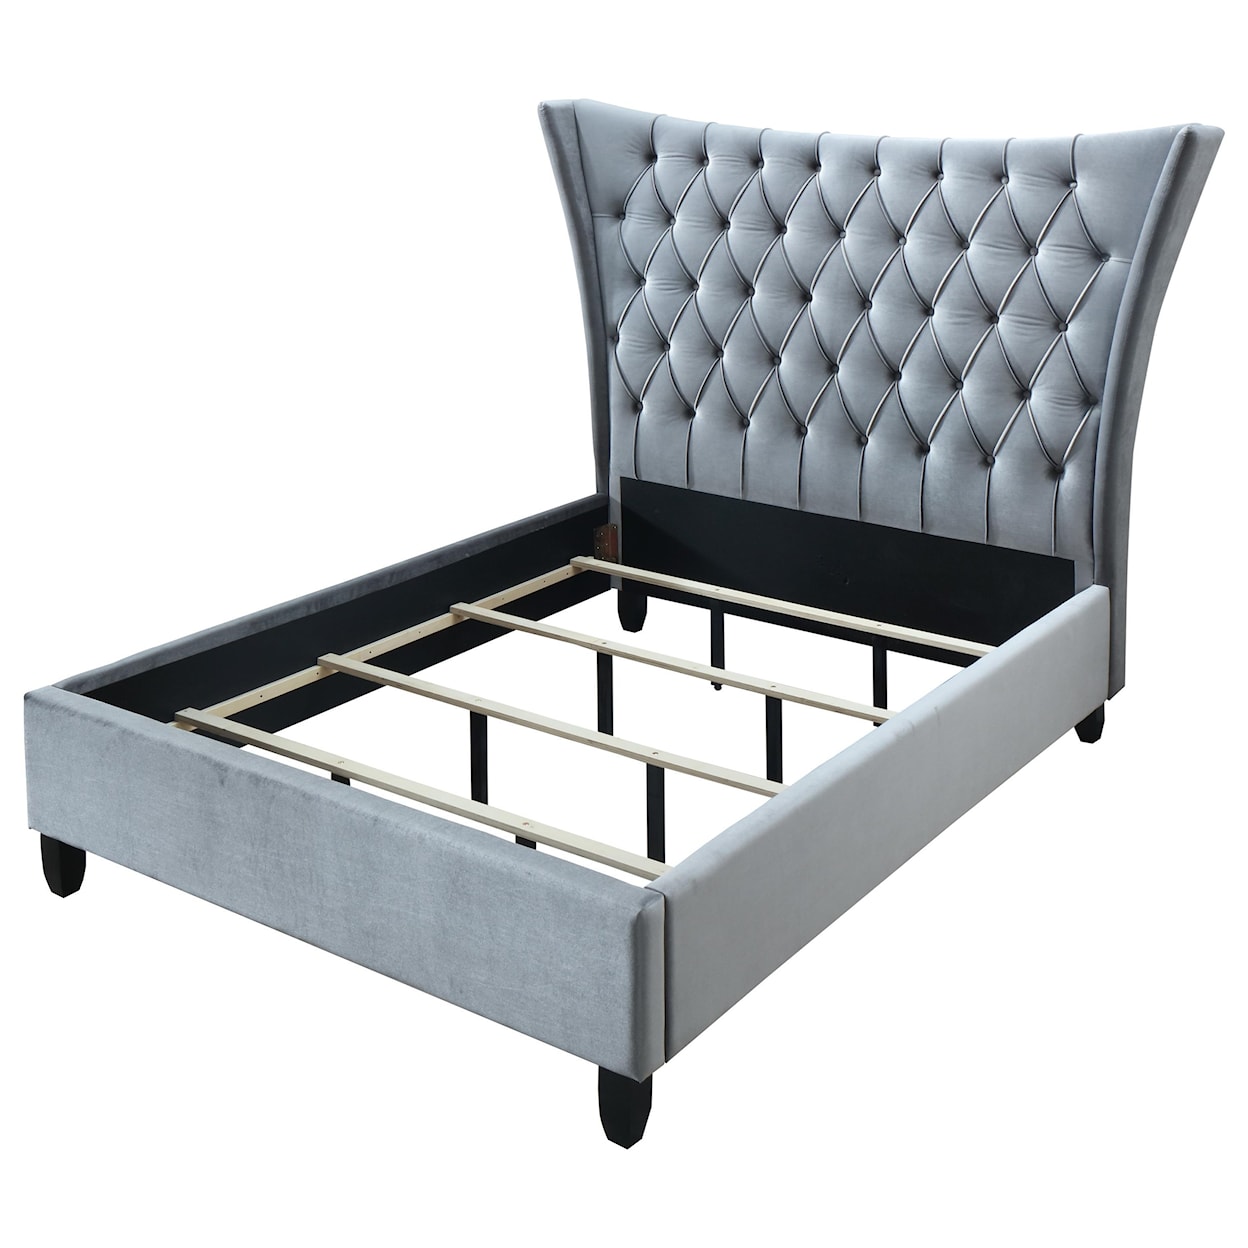 Lacey Furniture Biltmore King Upholstered Bed